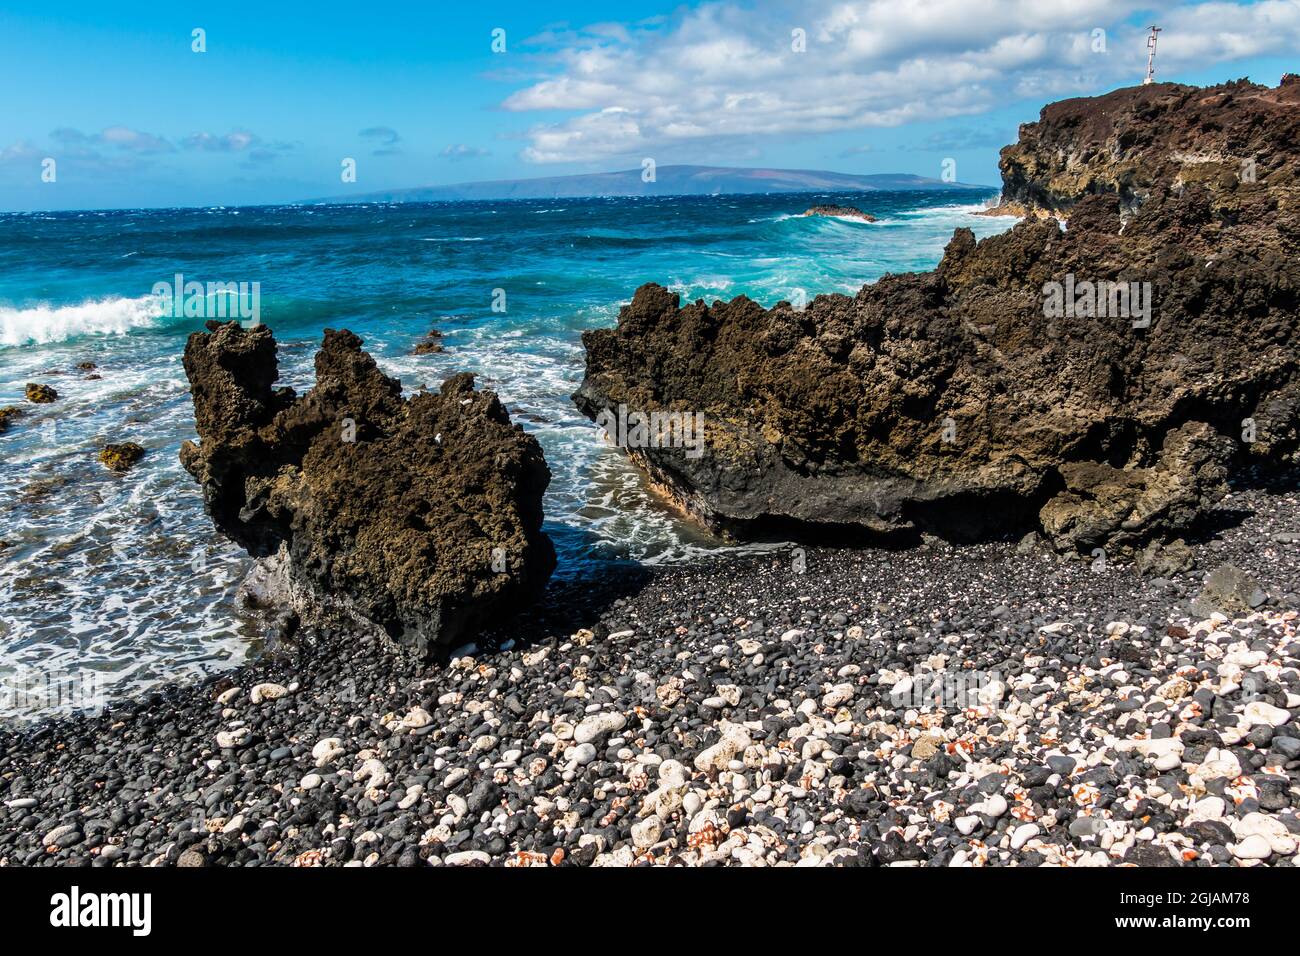 The Volcanic Shoreline of Cape Hanamanioa And Kaho'olawe Island Across  The Blue Waters of La Perouse Bay, Makena-La Perouse State Park, Maui, Hawaii, Stock Photo